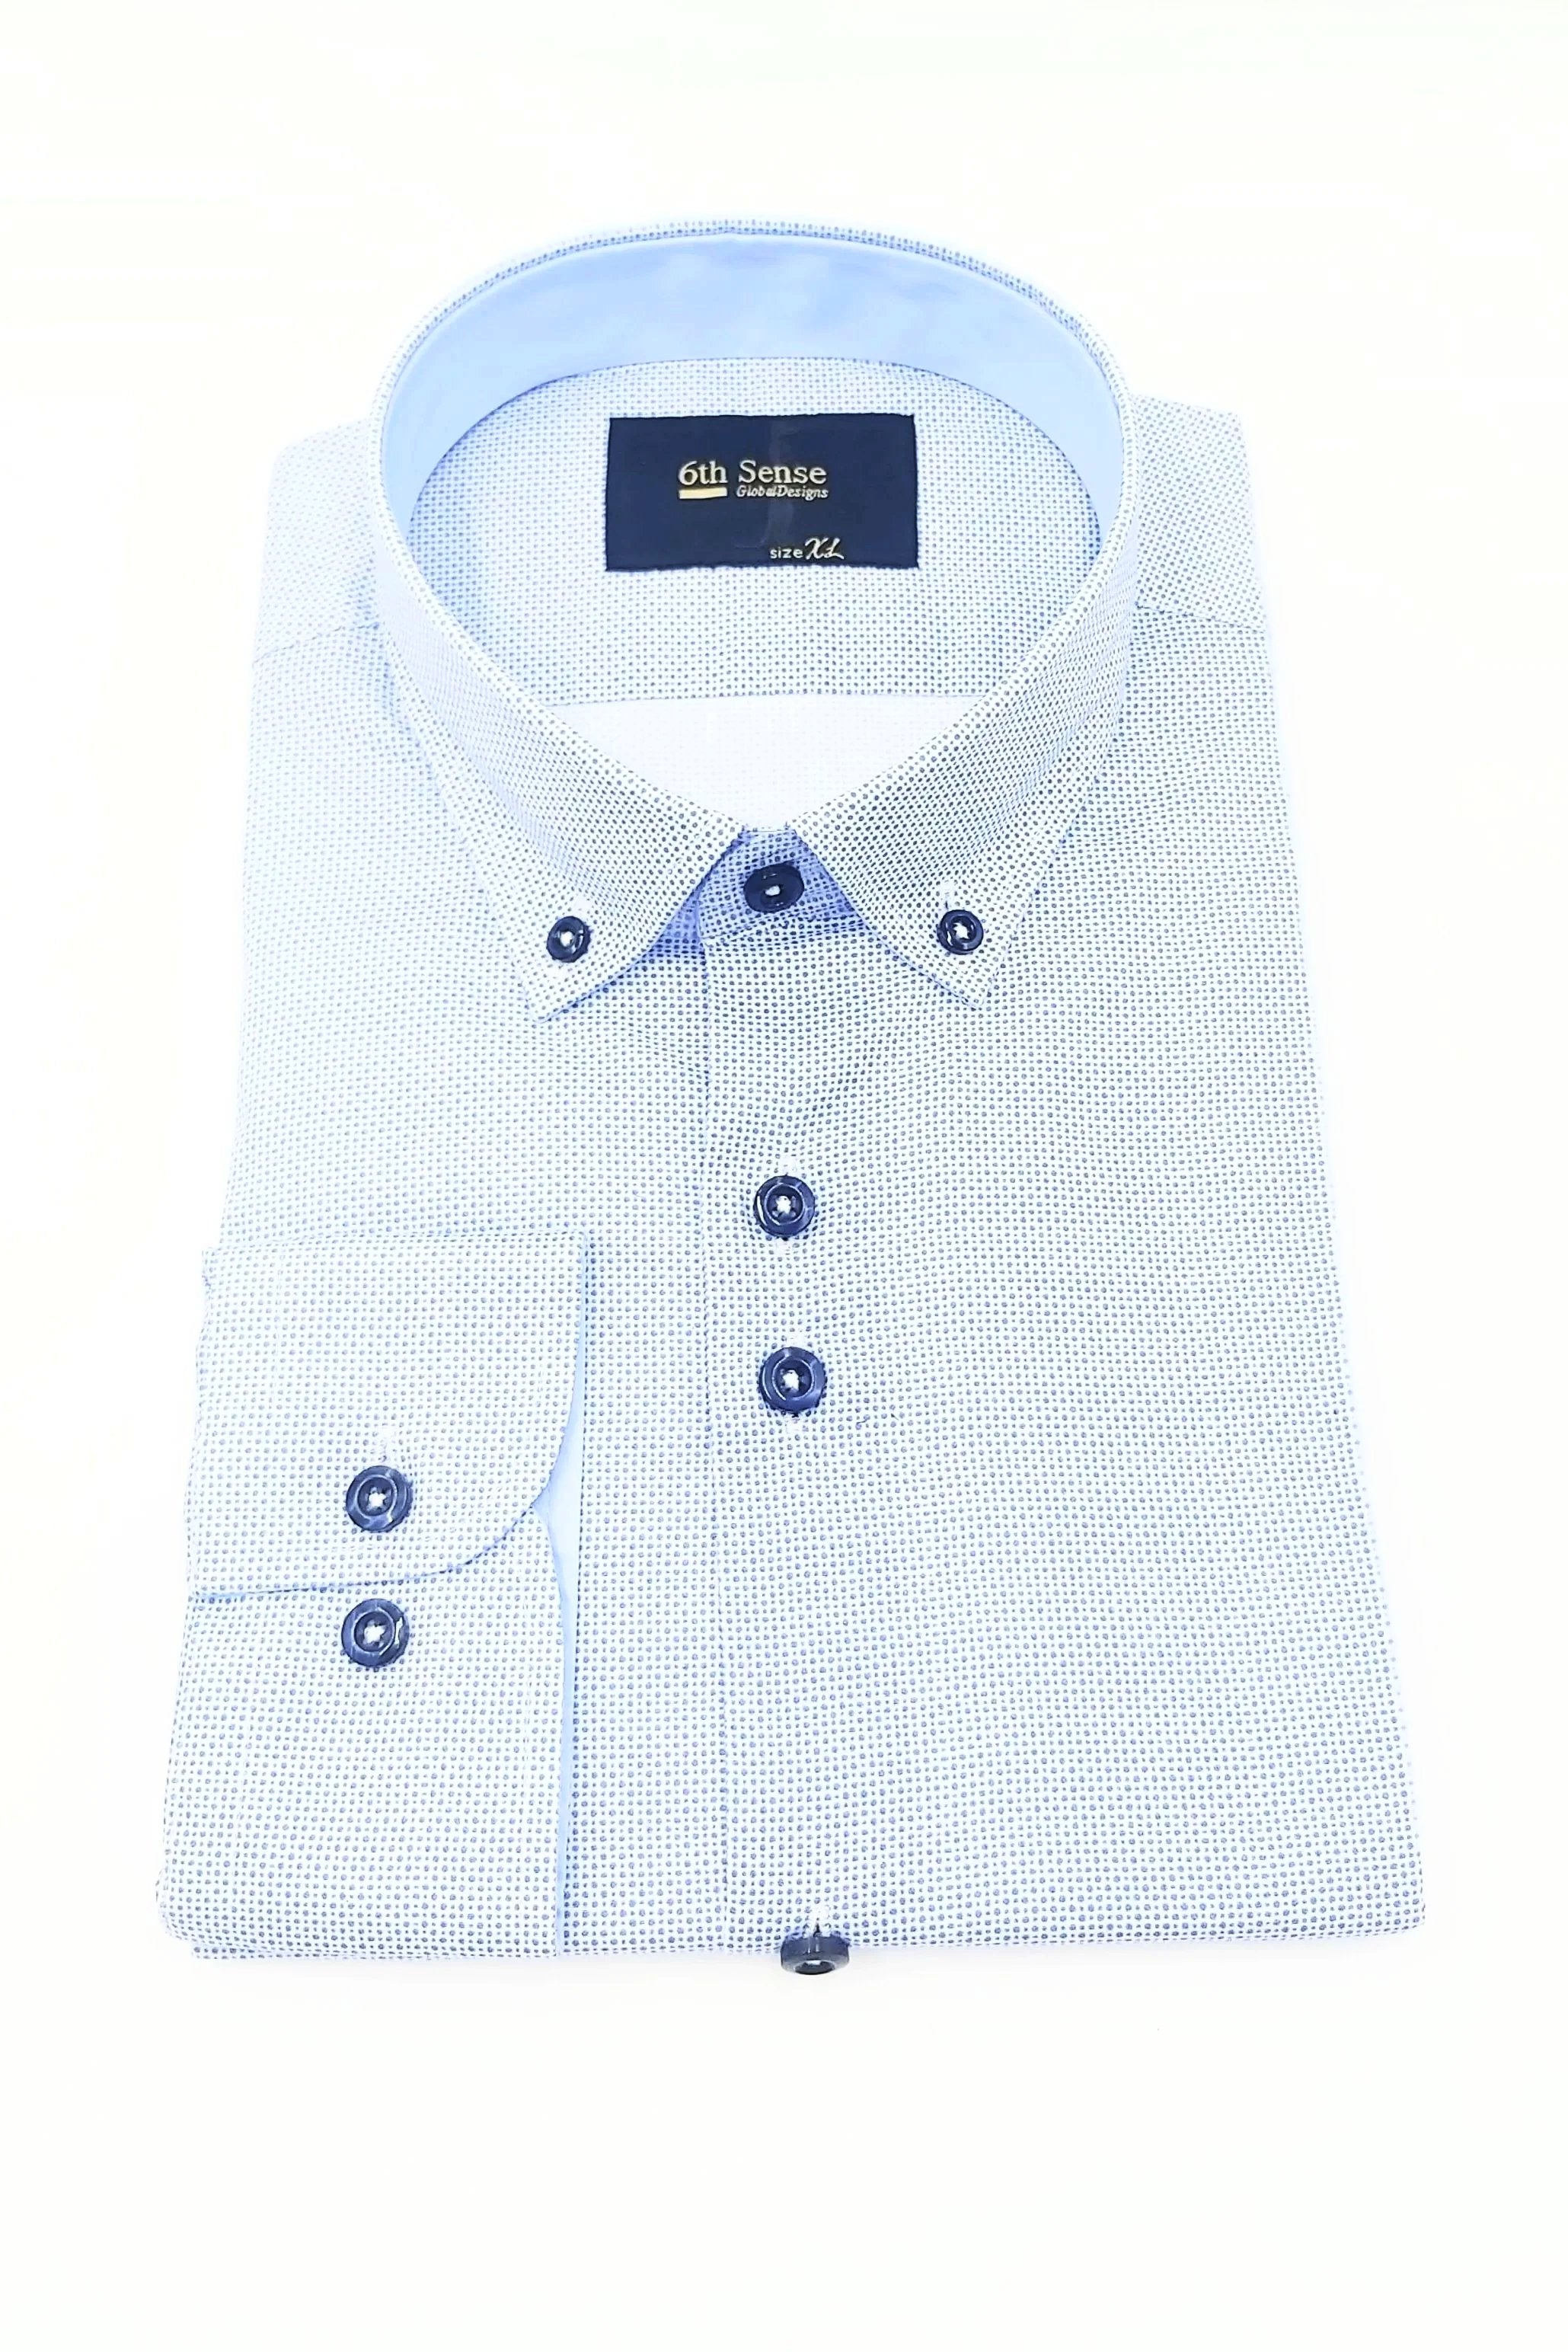 Men's Button Down Blue Dot Pattern Shirt-Front View